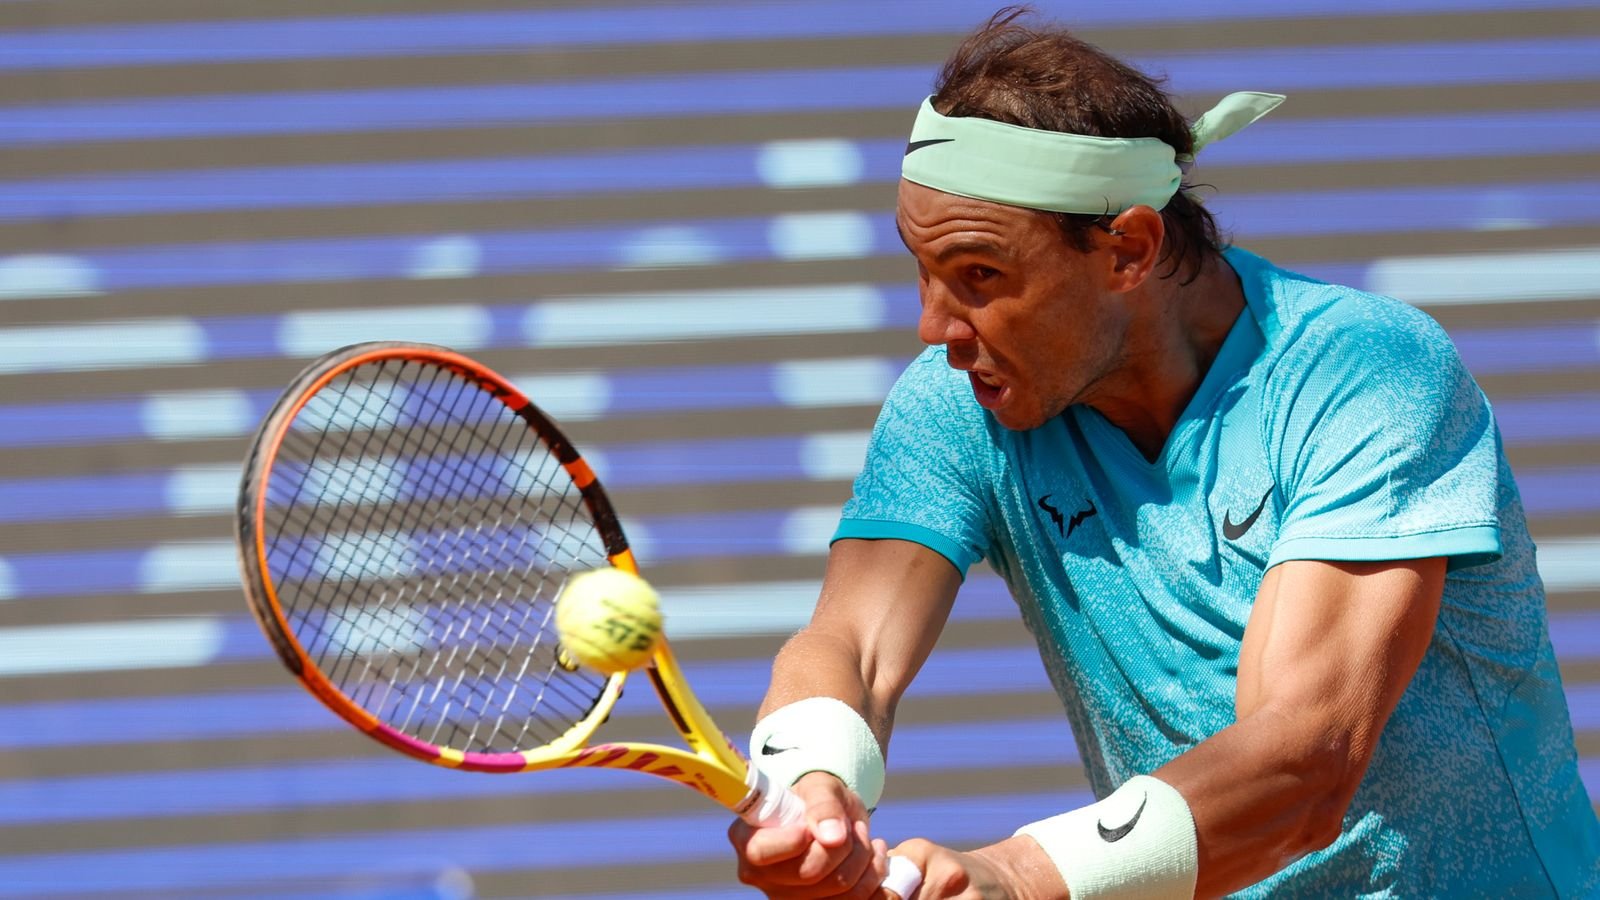 Rafael Nadal wins another three-set thriller to reach Swedish Open final | Tennis News